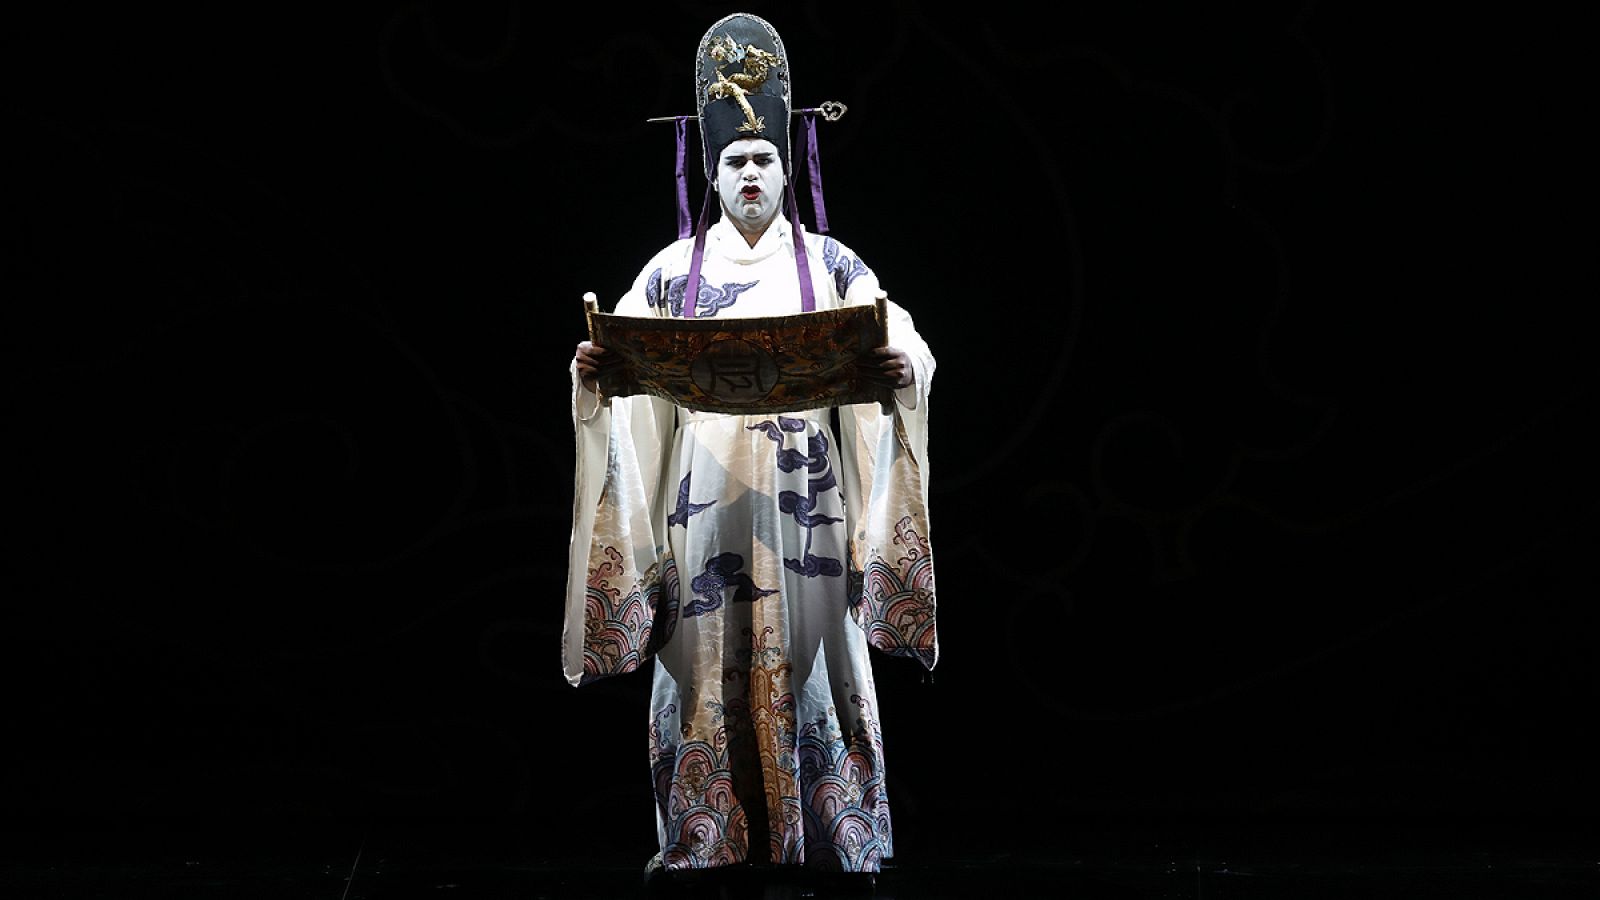 Una versiÃ³n renovada de "Turandot" con dedicatoria a CaballÃ© en Valencia